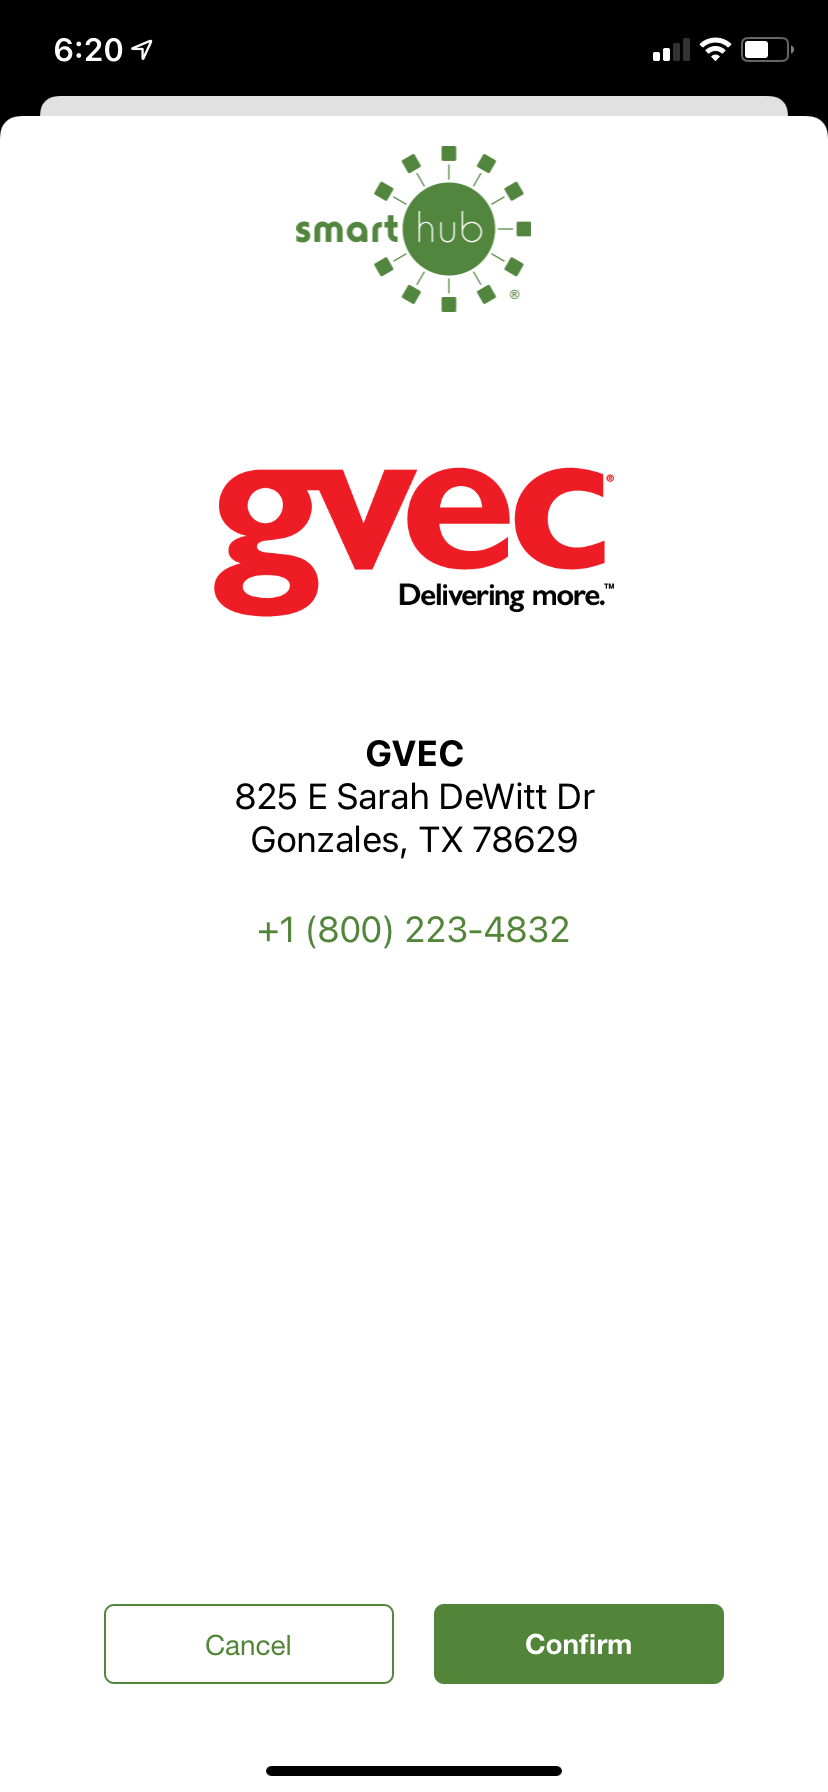 Select GVEC as service provider